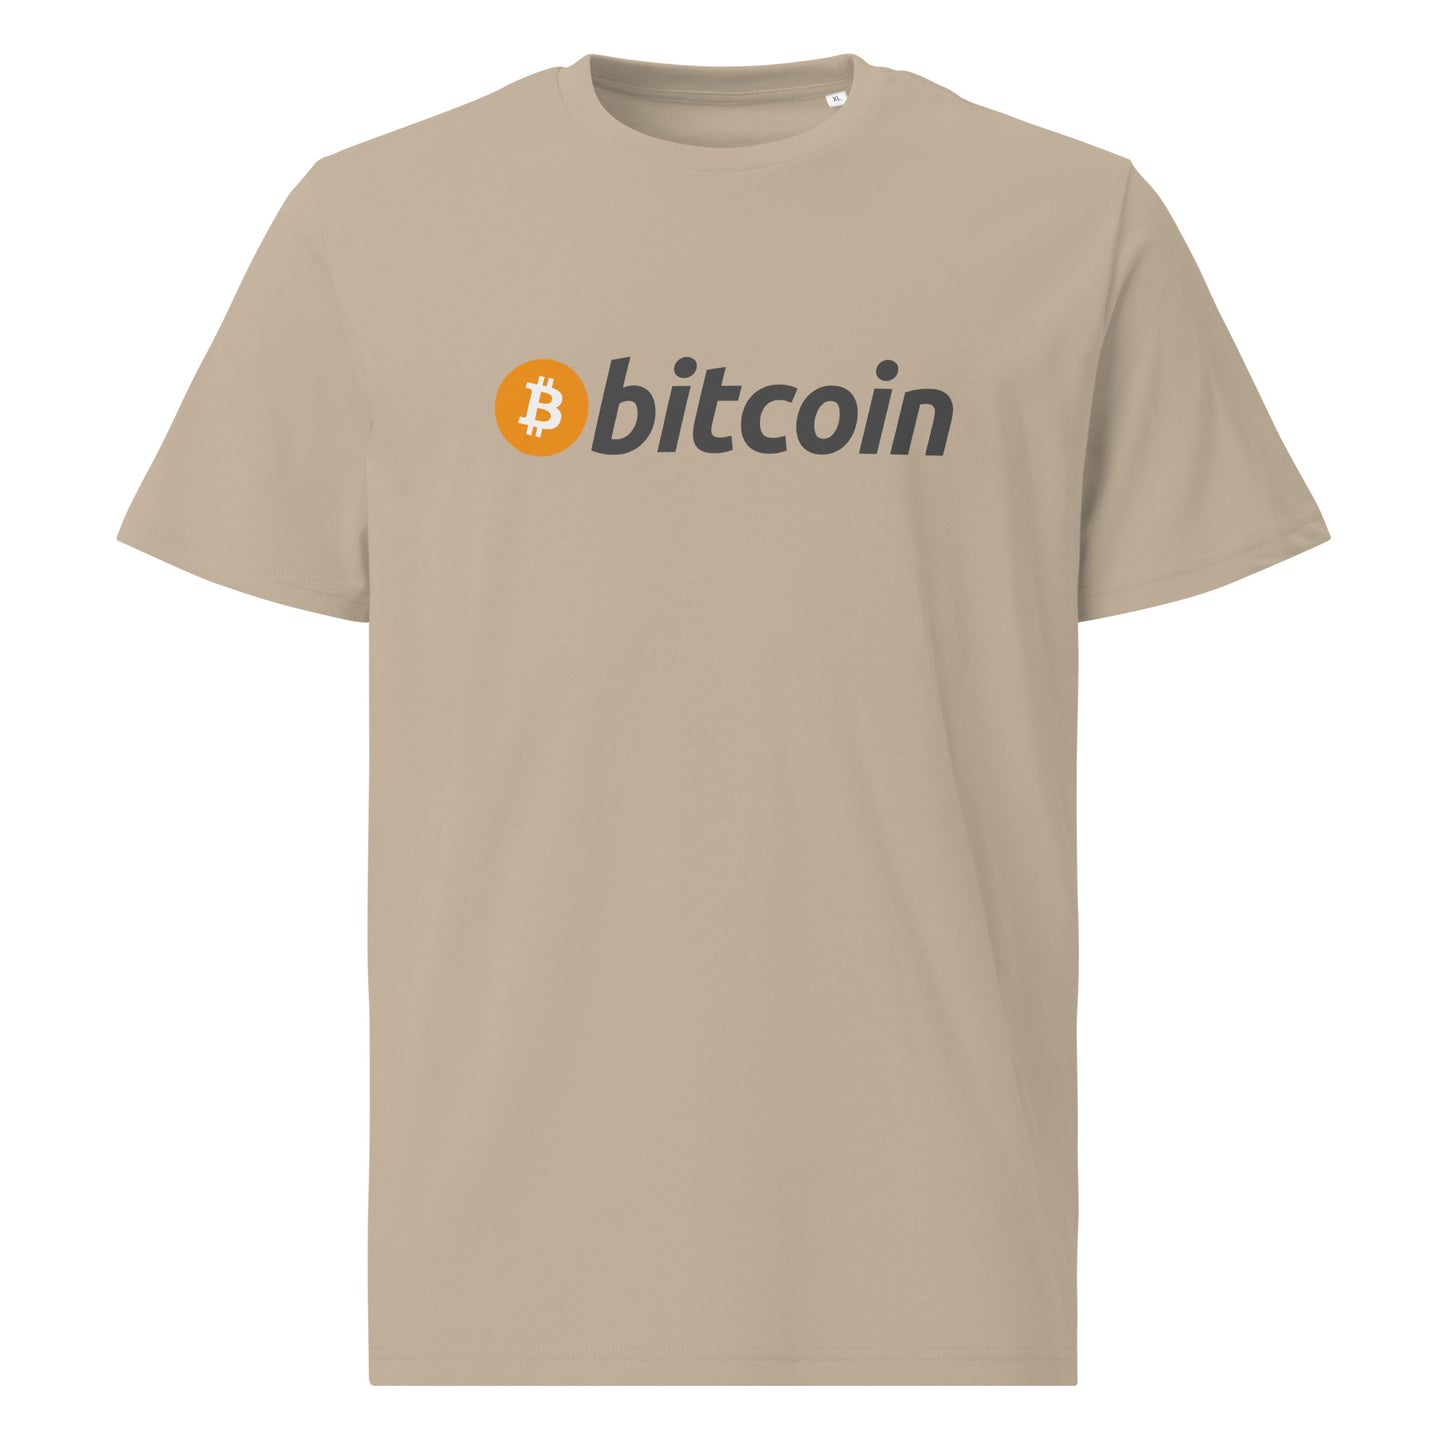 Bitcoin logo and text